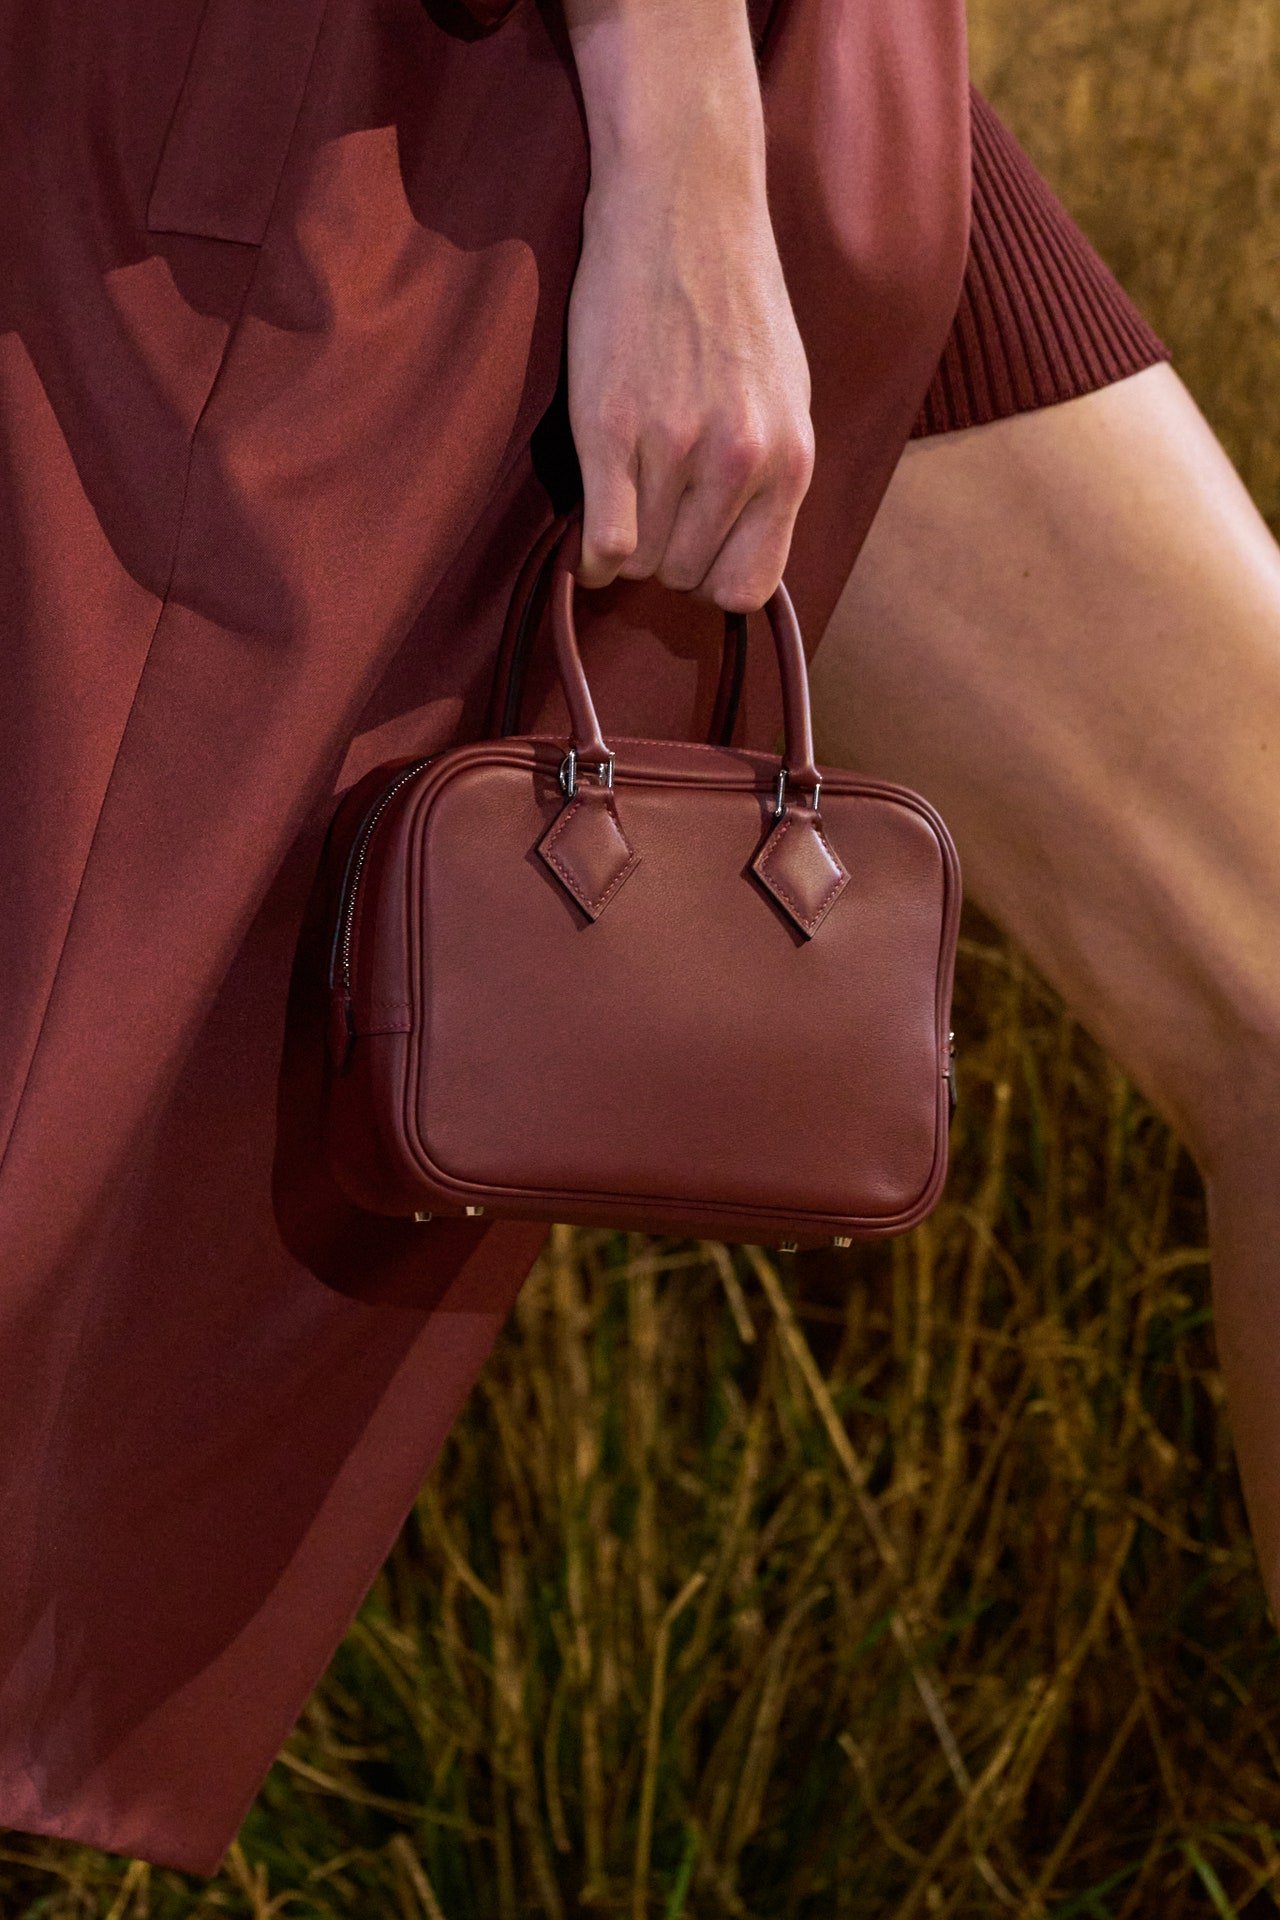 Hermès latest bag colours revealed - Still in fashion